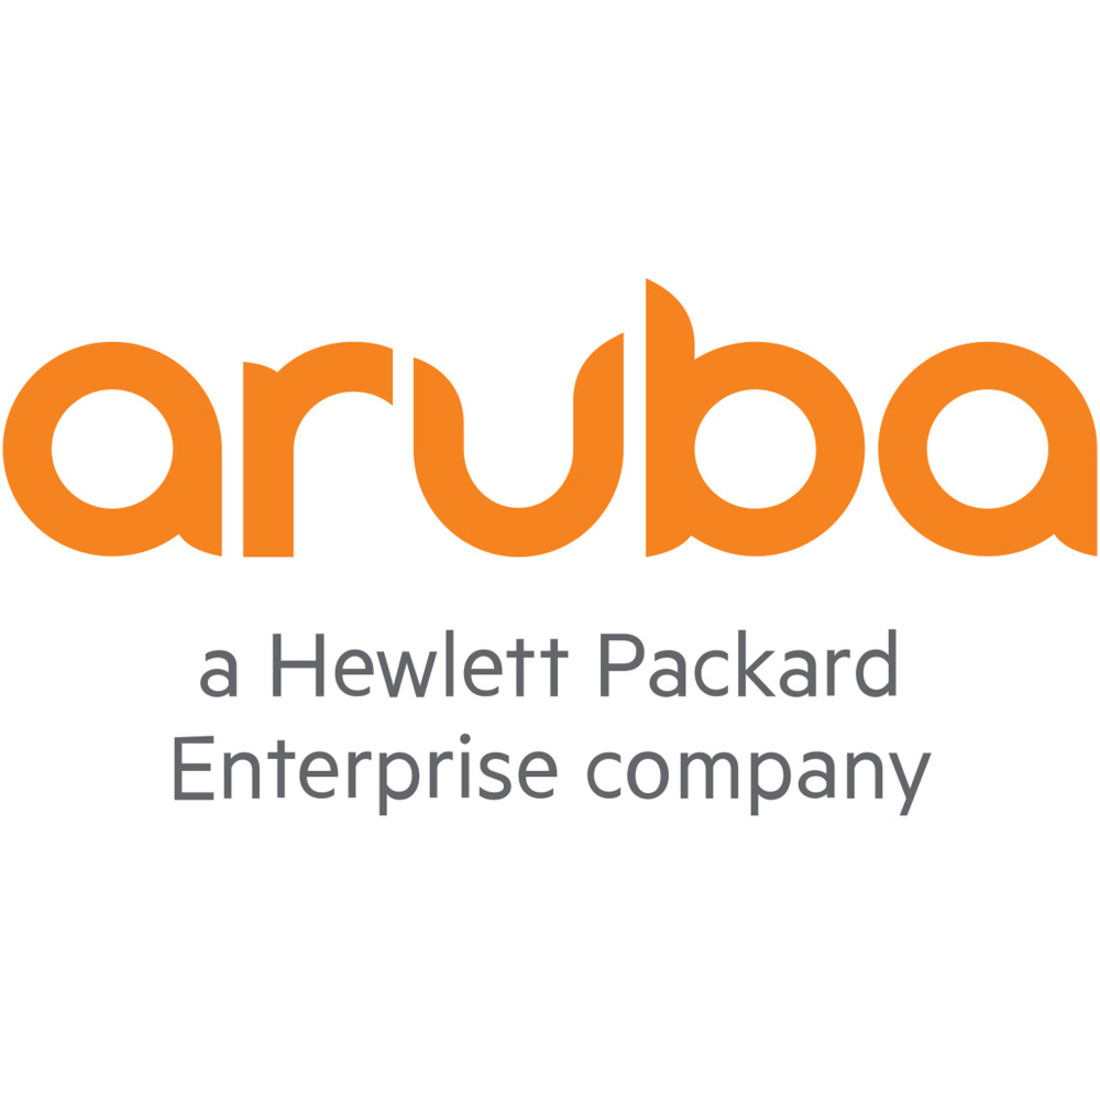 Aruba ClearPass OnGuardSubscription License500 EndpointElectronicMac, PC JZ482AAE